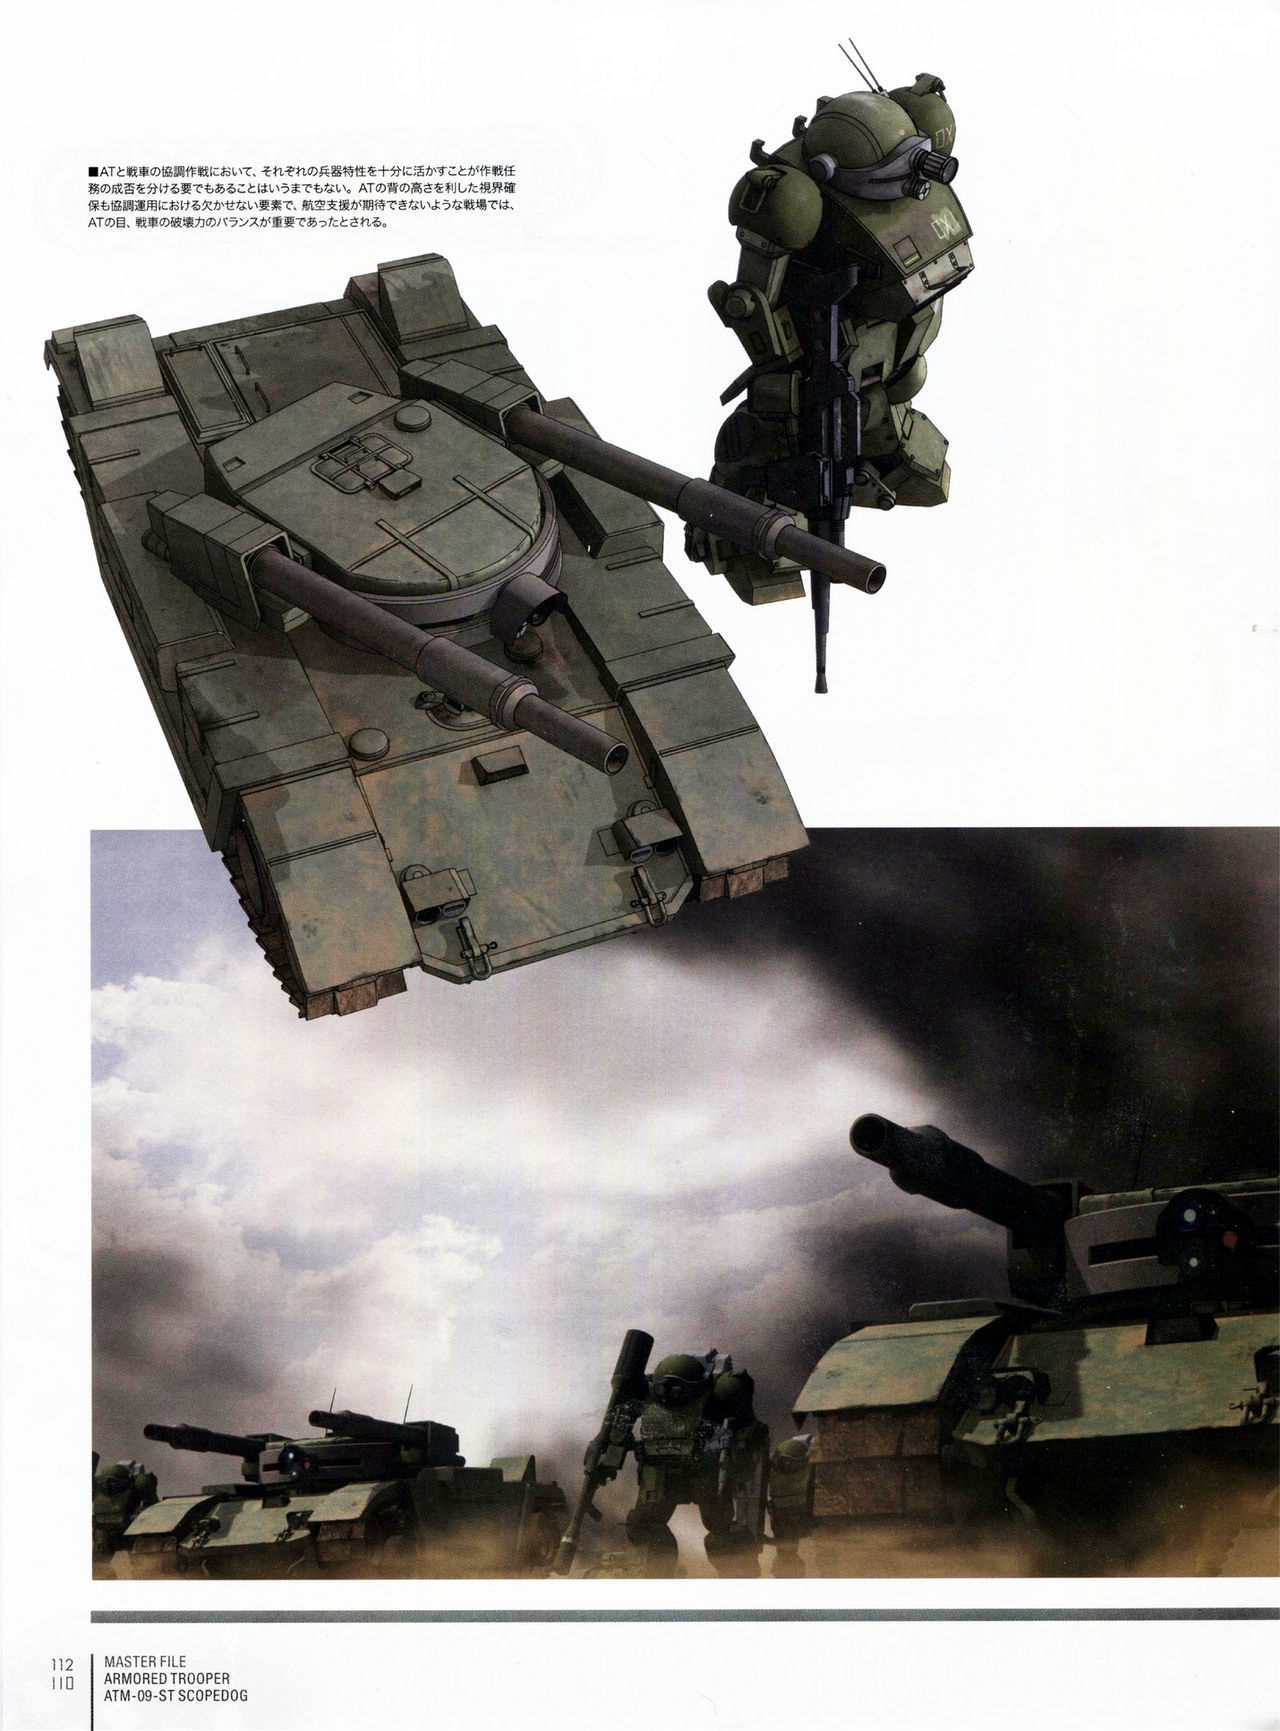 Master File - Armored Trooper AMT-09-ST Scopedog 115